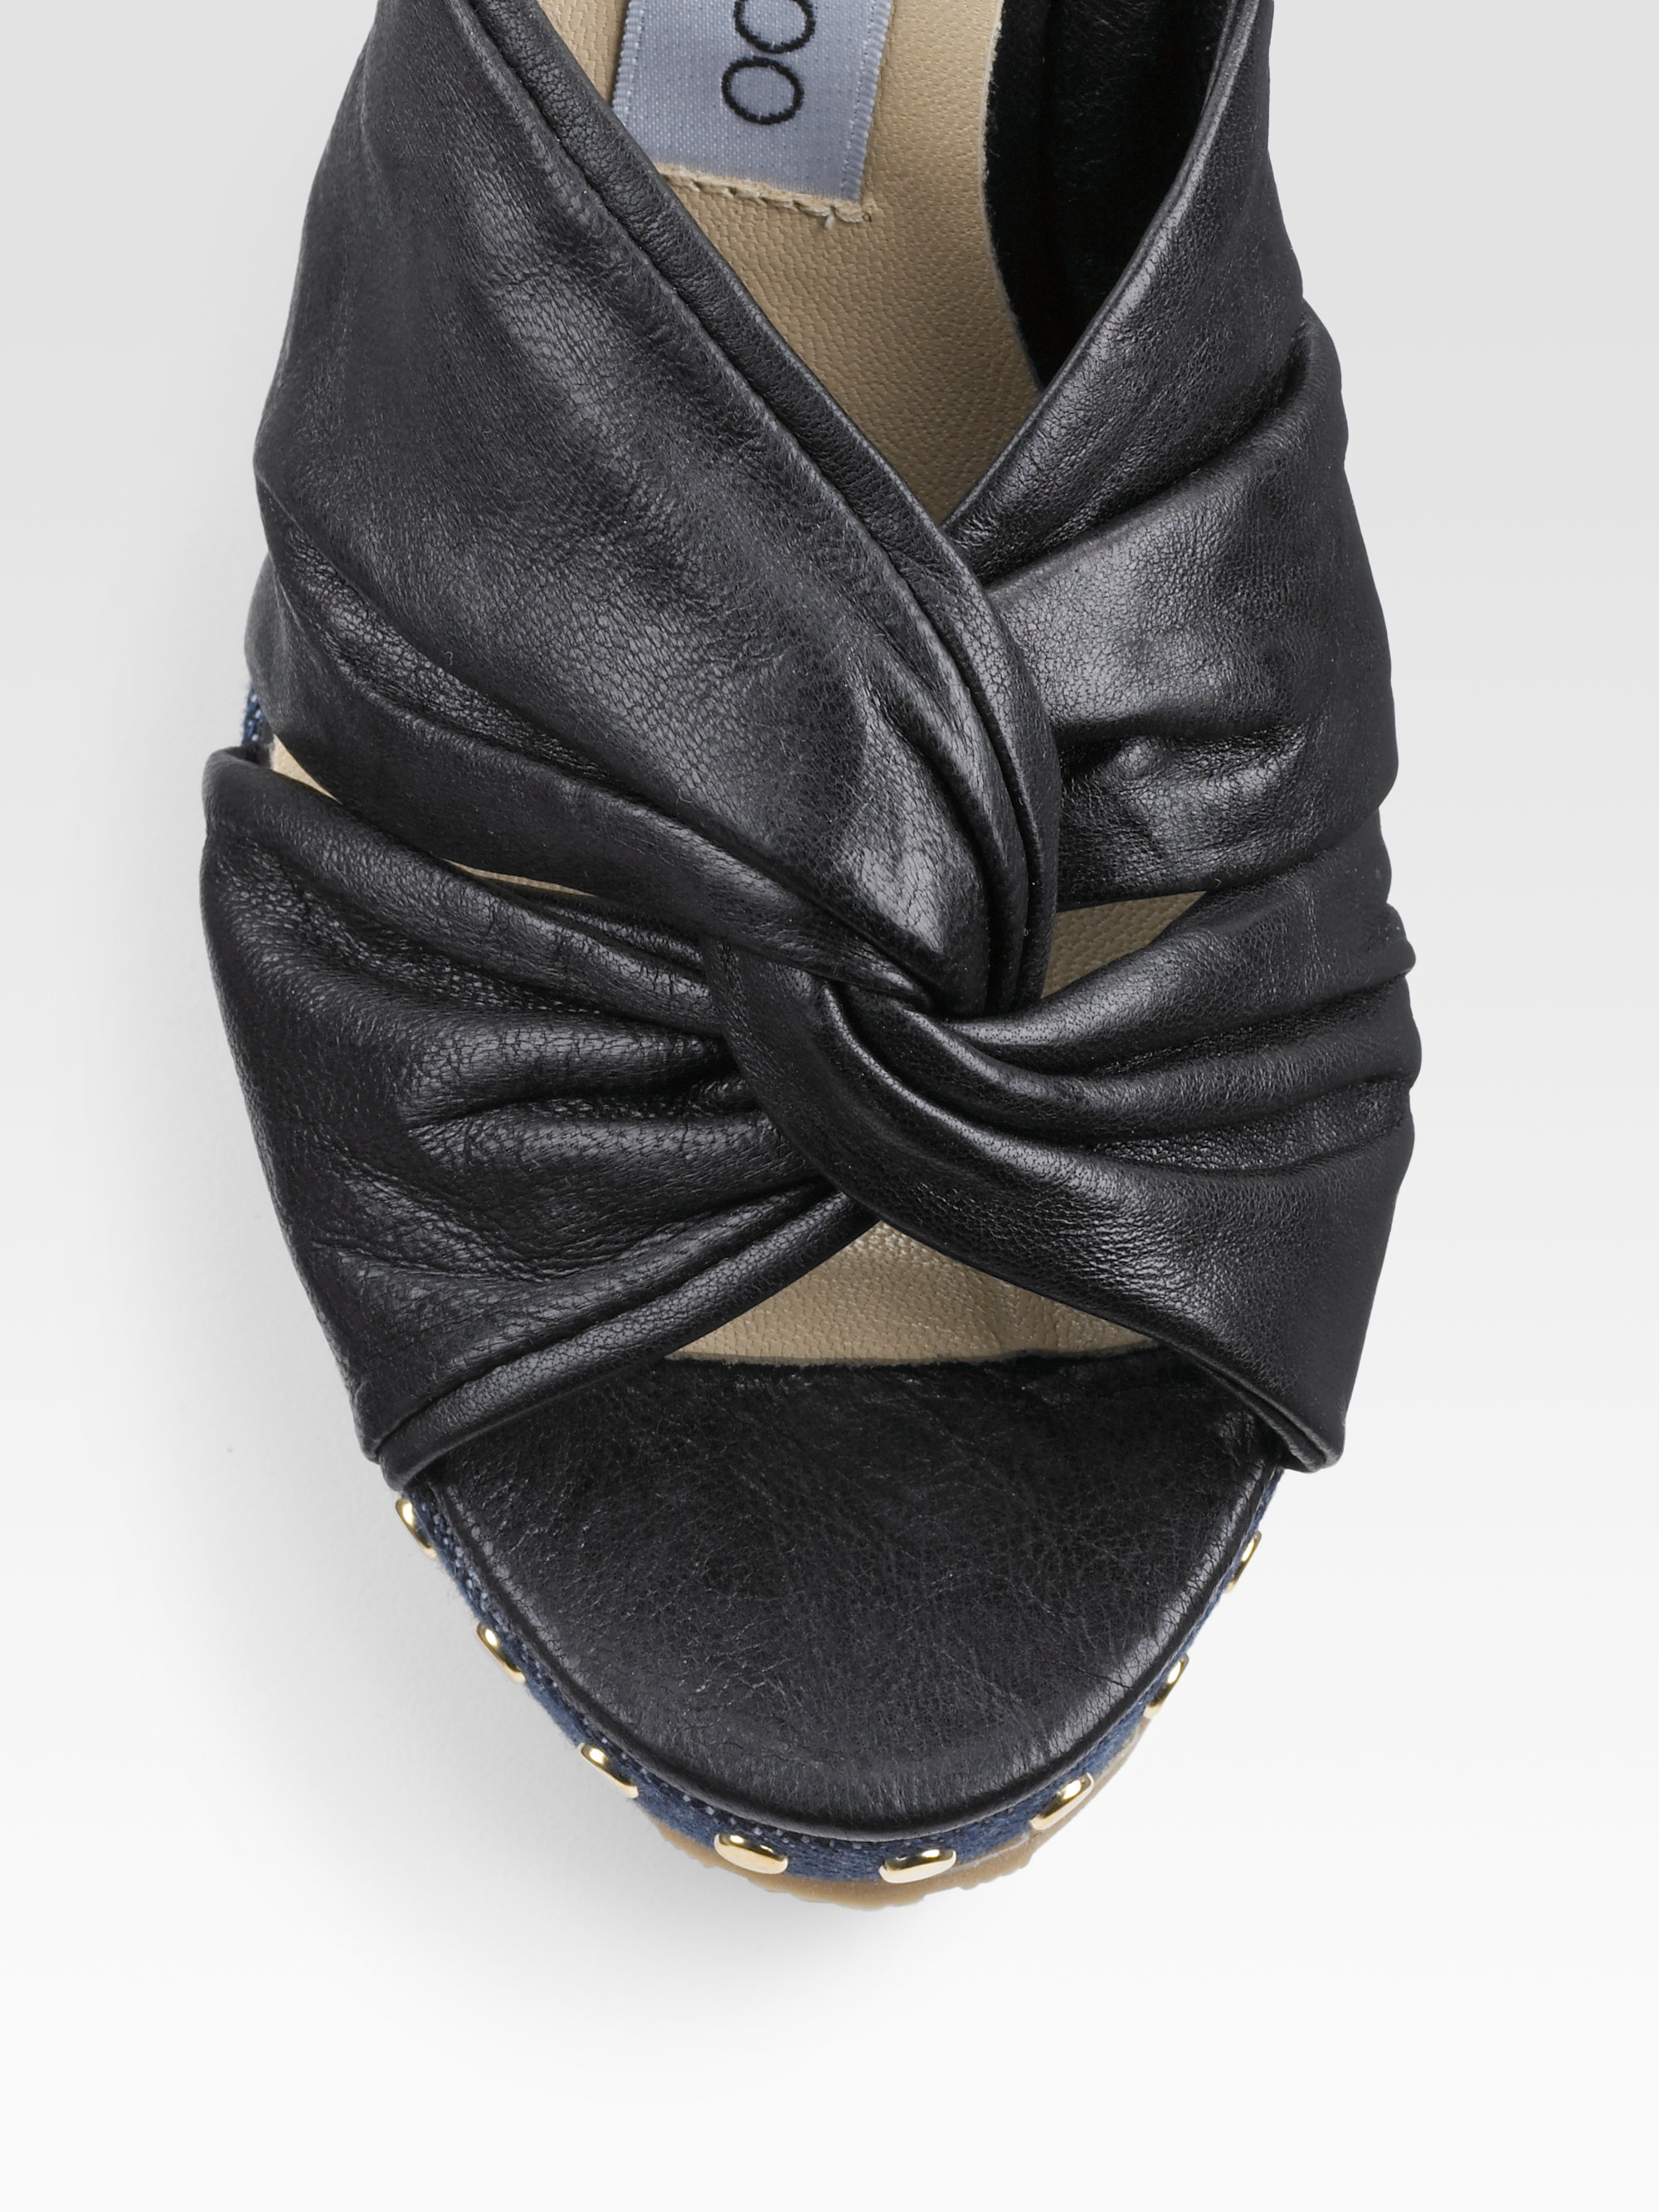 Jimmy Choo Denim Wedge Sandals in Black - Lyst